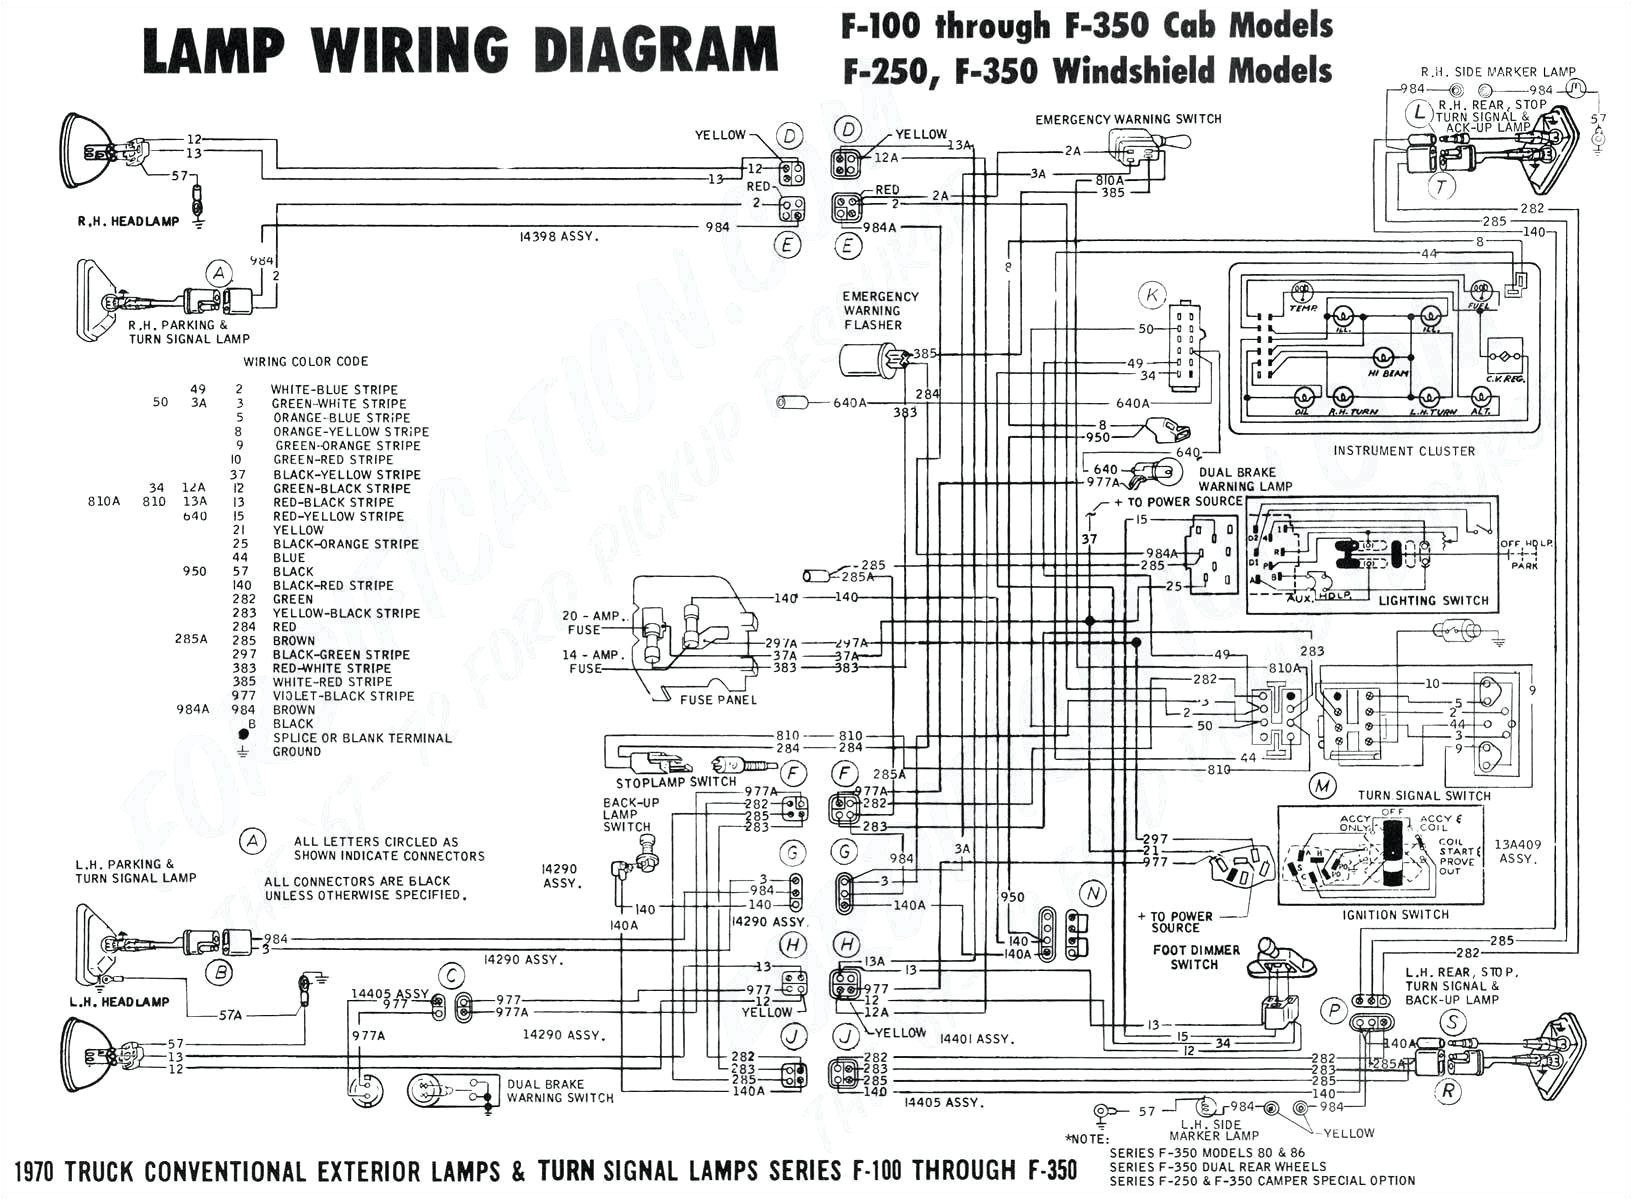 electrical wiring basics canada wiring diagram ame house electrical wiring diagram canada